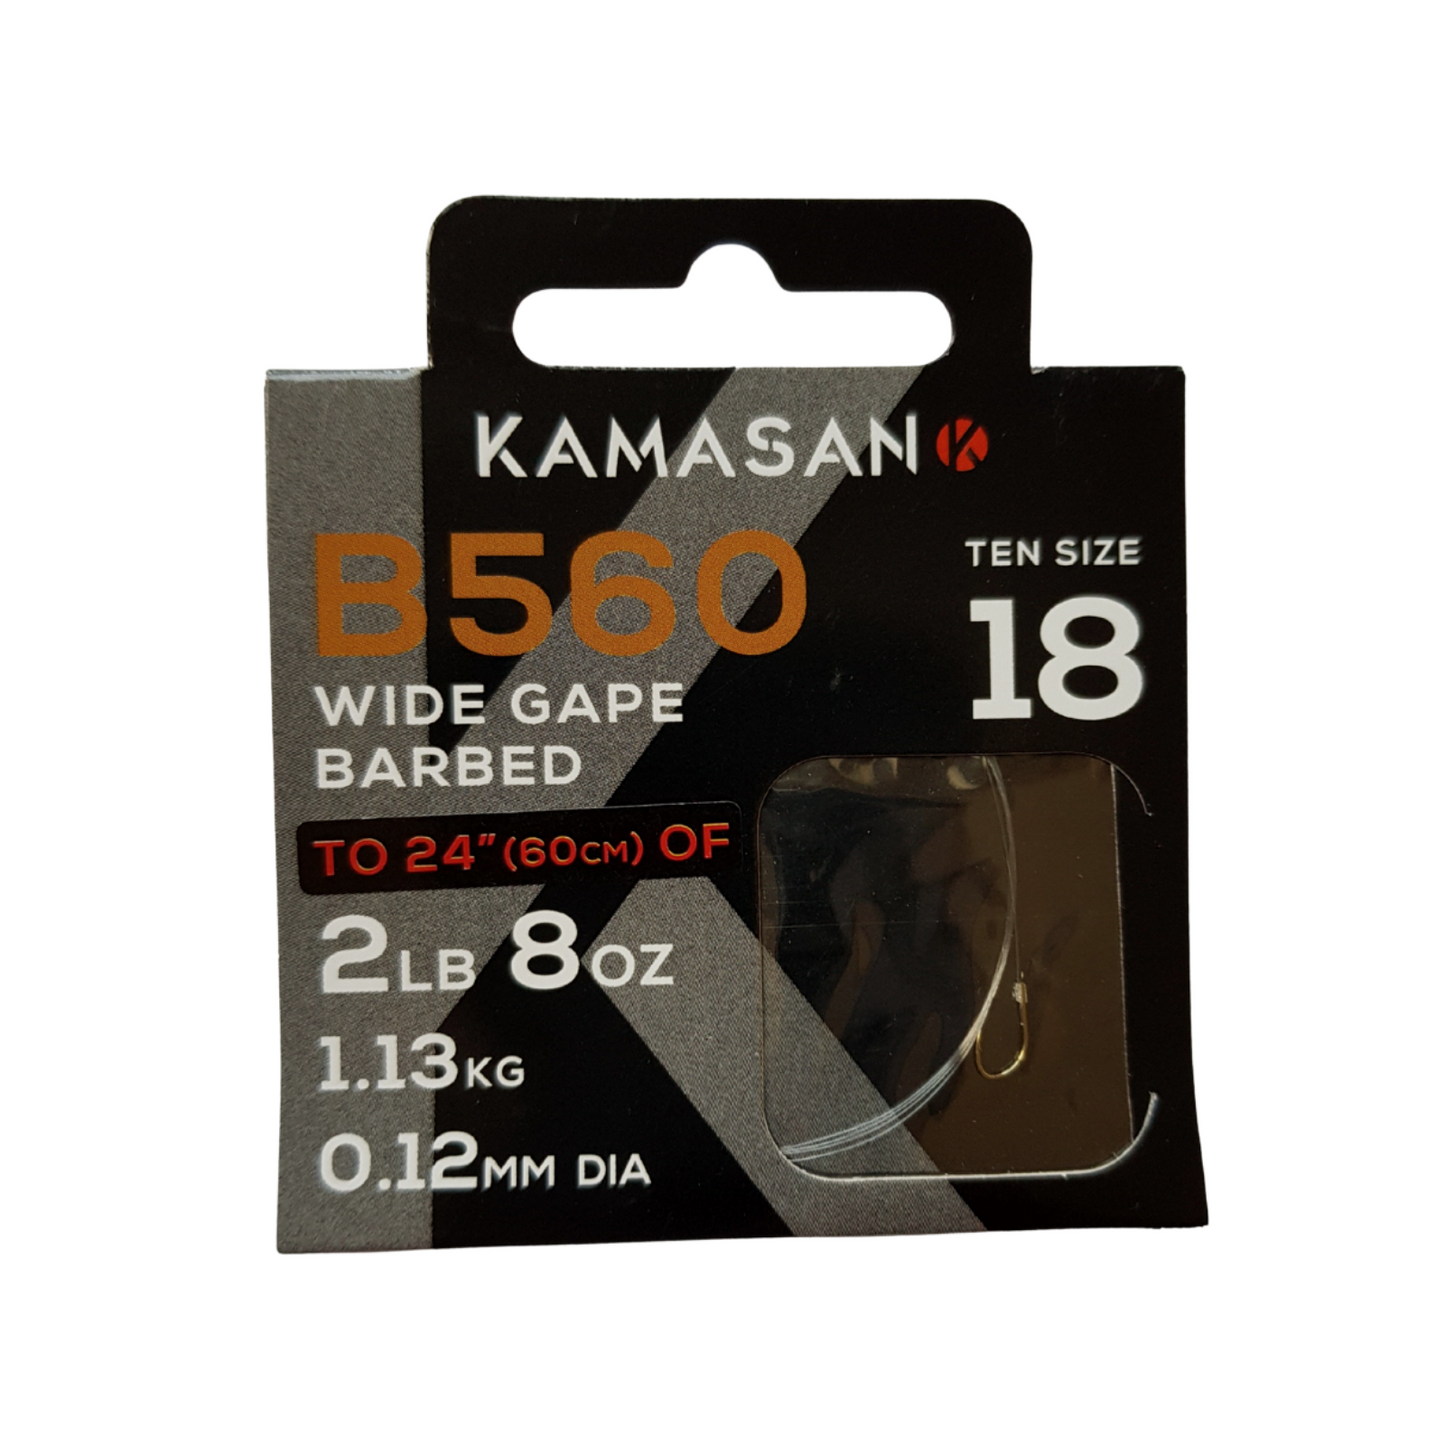 Kamasan B560 Hooks To Nylon 24" 60cm Size 18 - NEW IN!